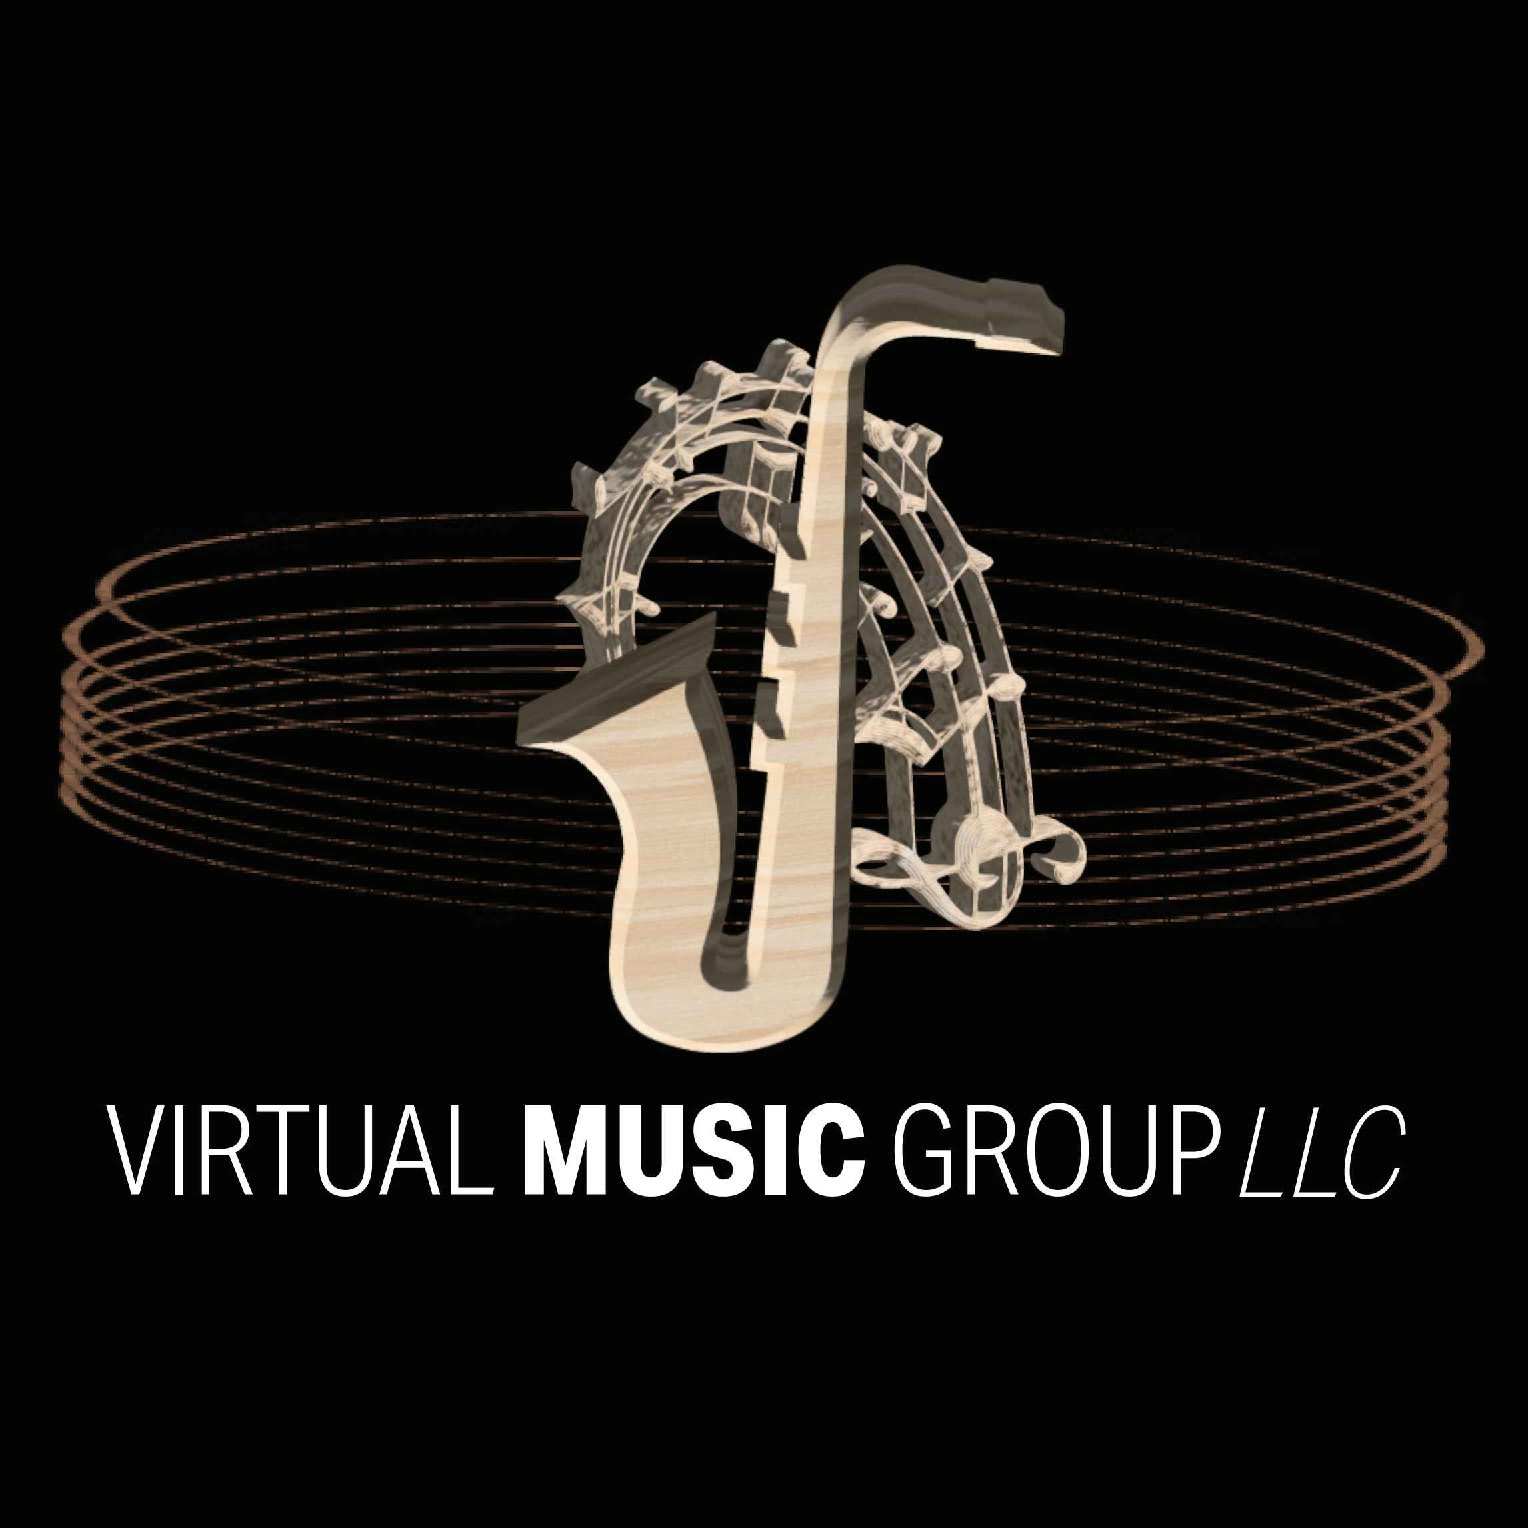 VIRTUAL MUSIC GROUP, LLC